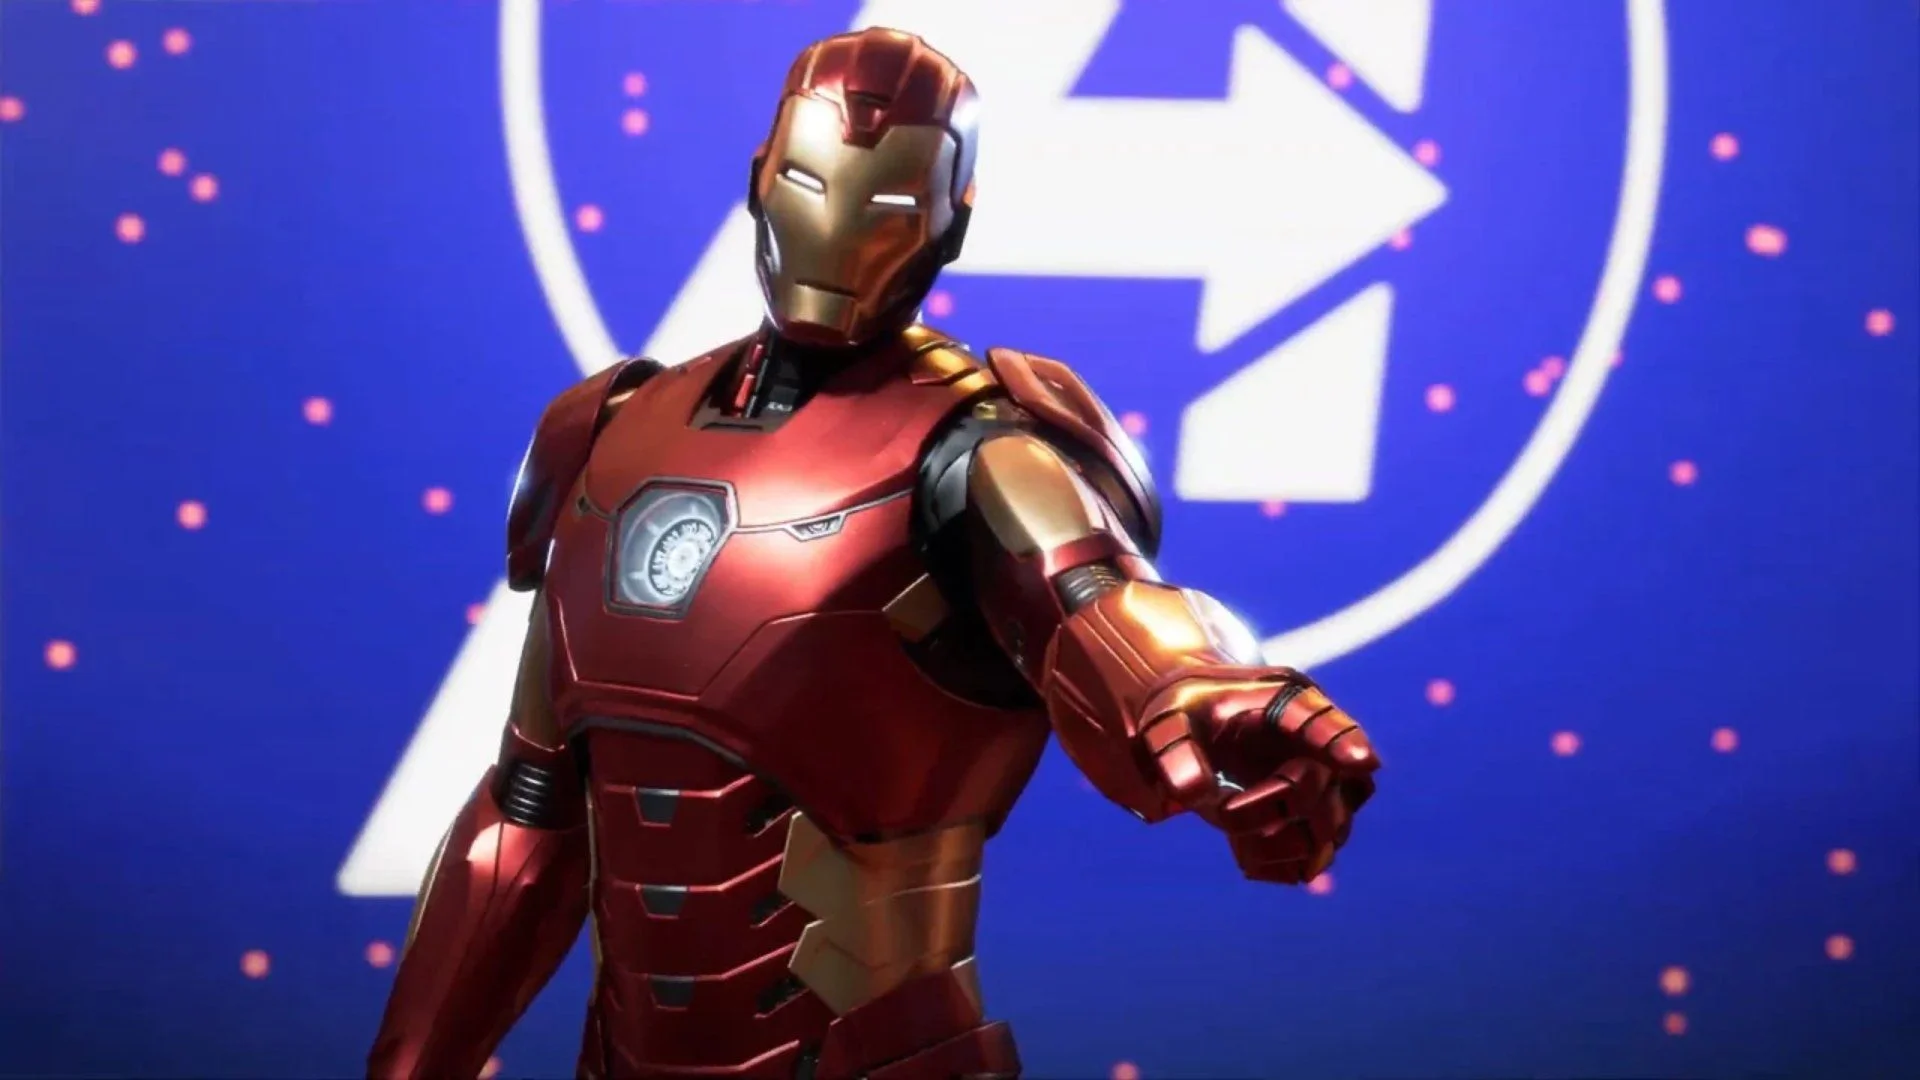 The Iron Man game is still in development